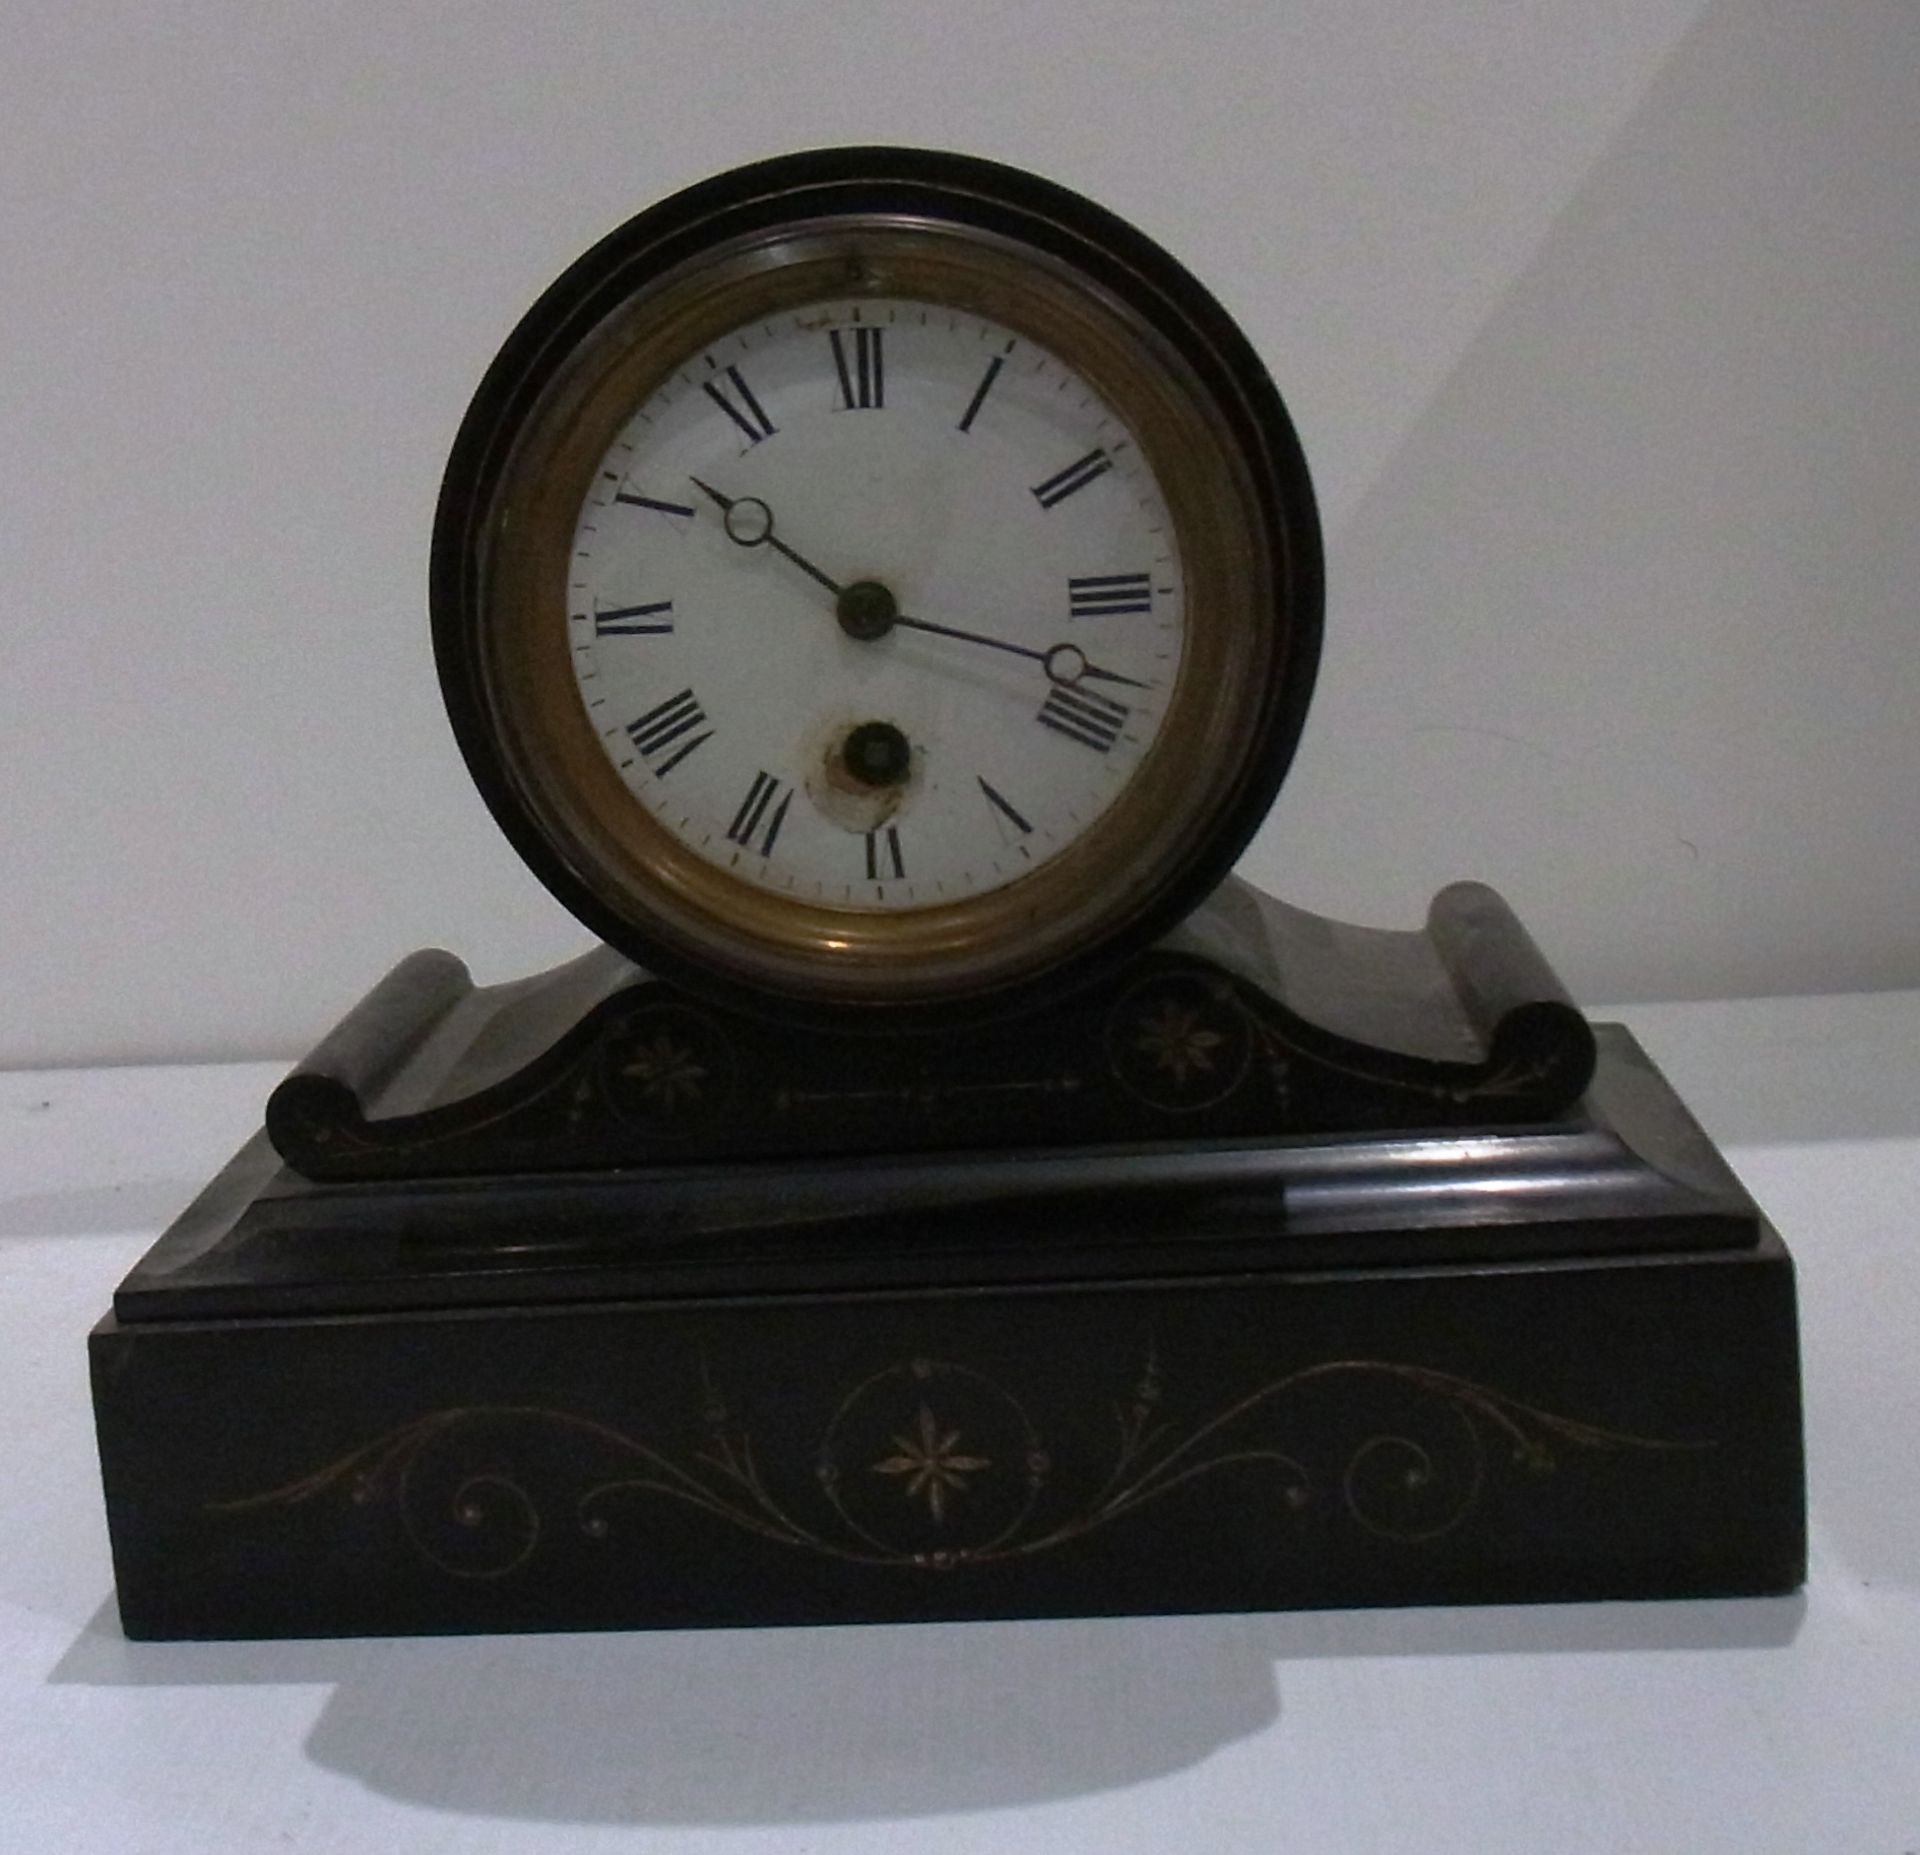 Black slate mantel clock - 9" high